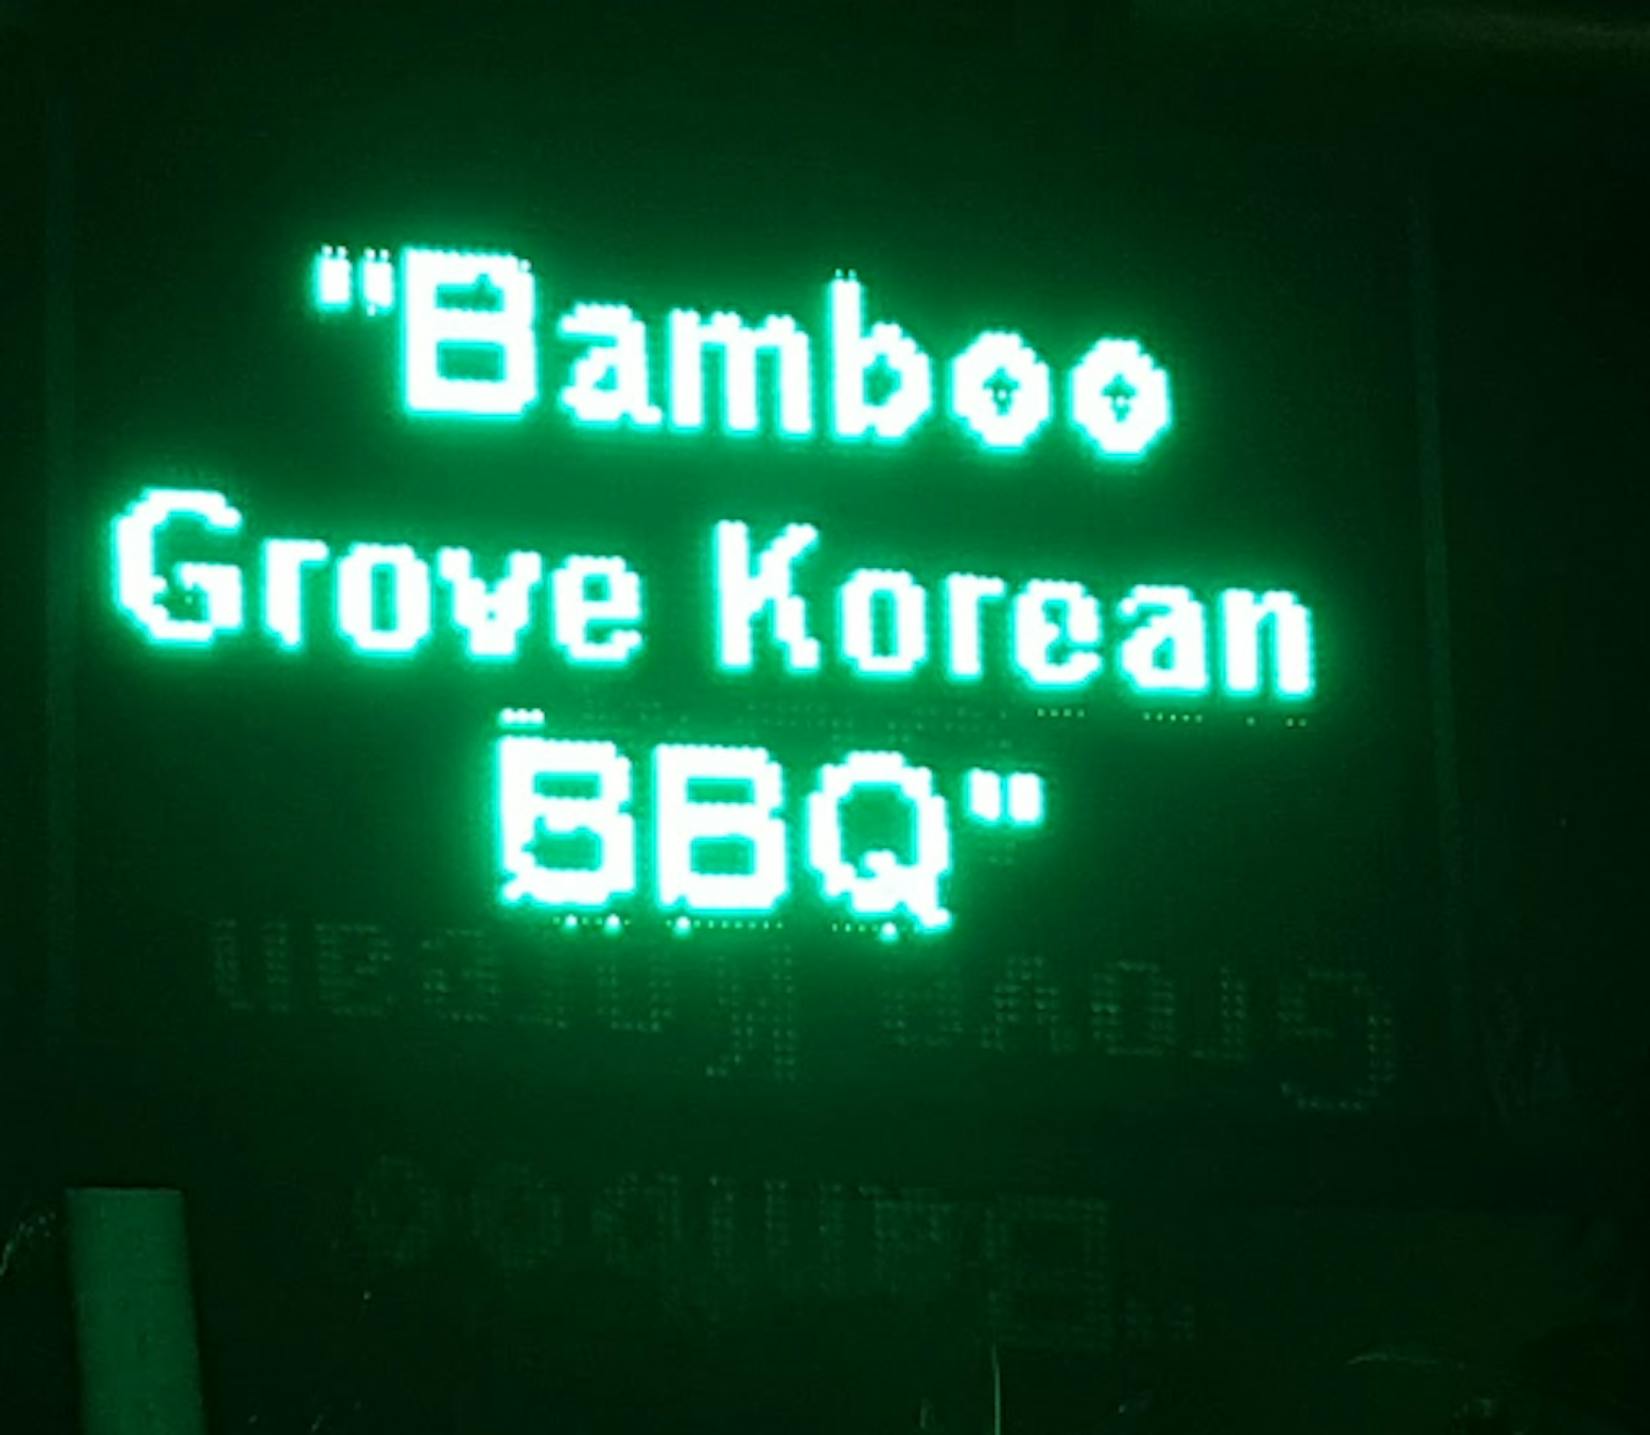 Bamboo Korean BBQ | yathar